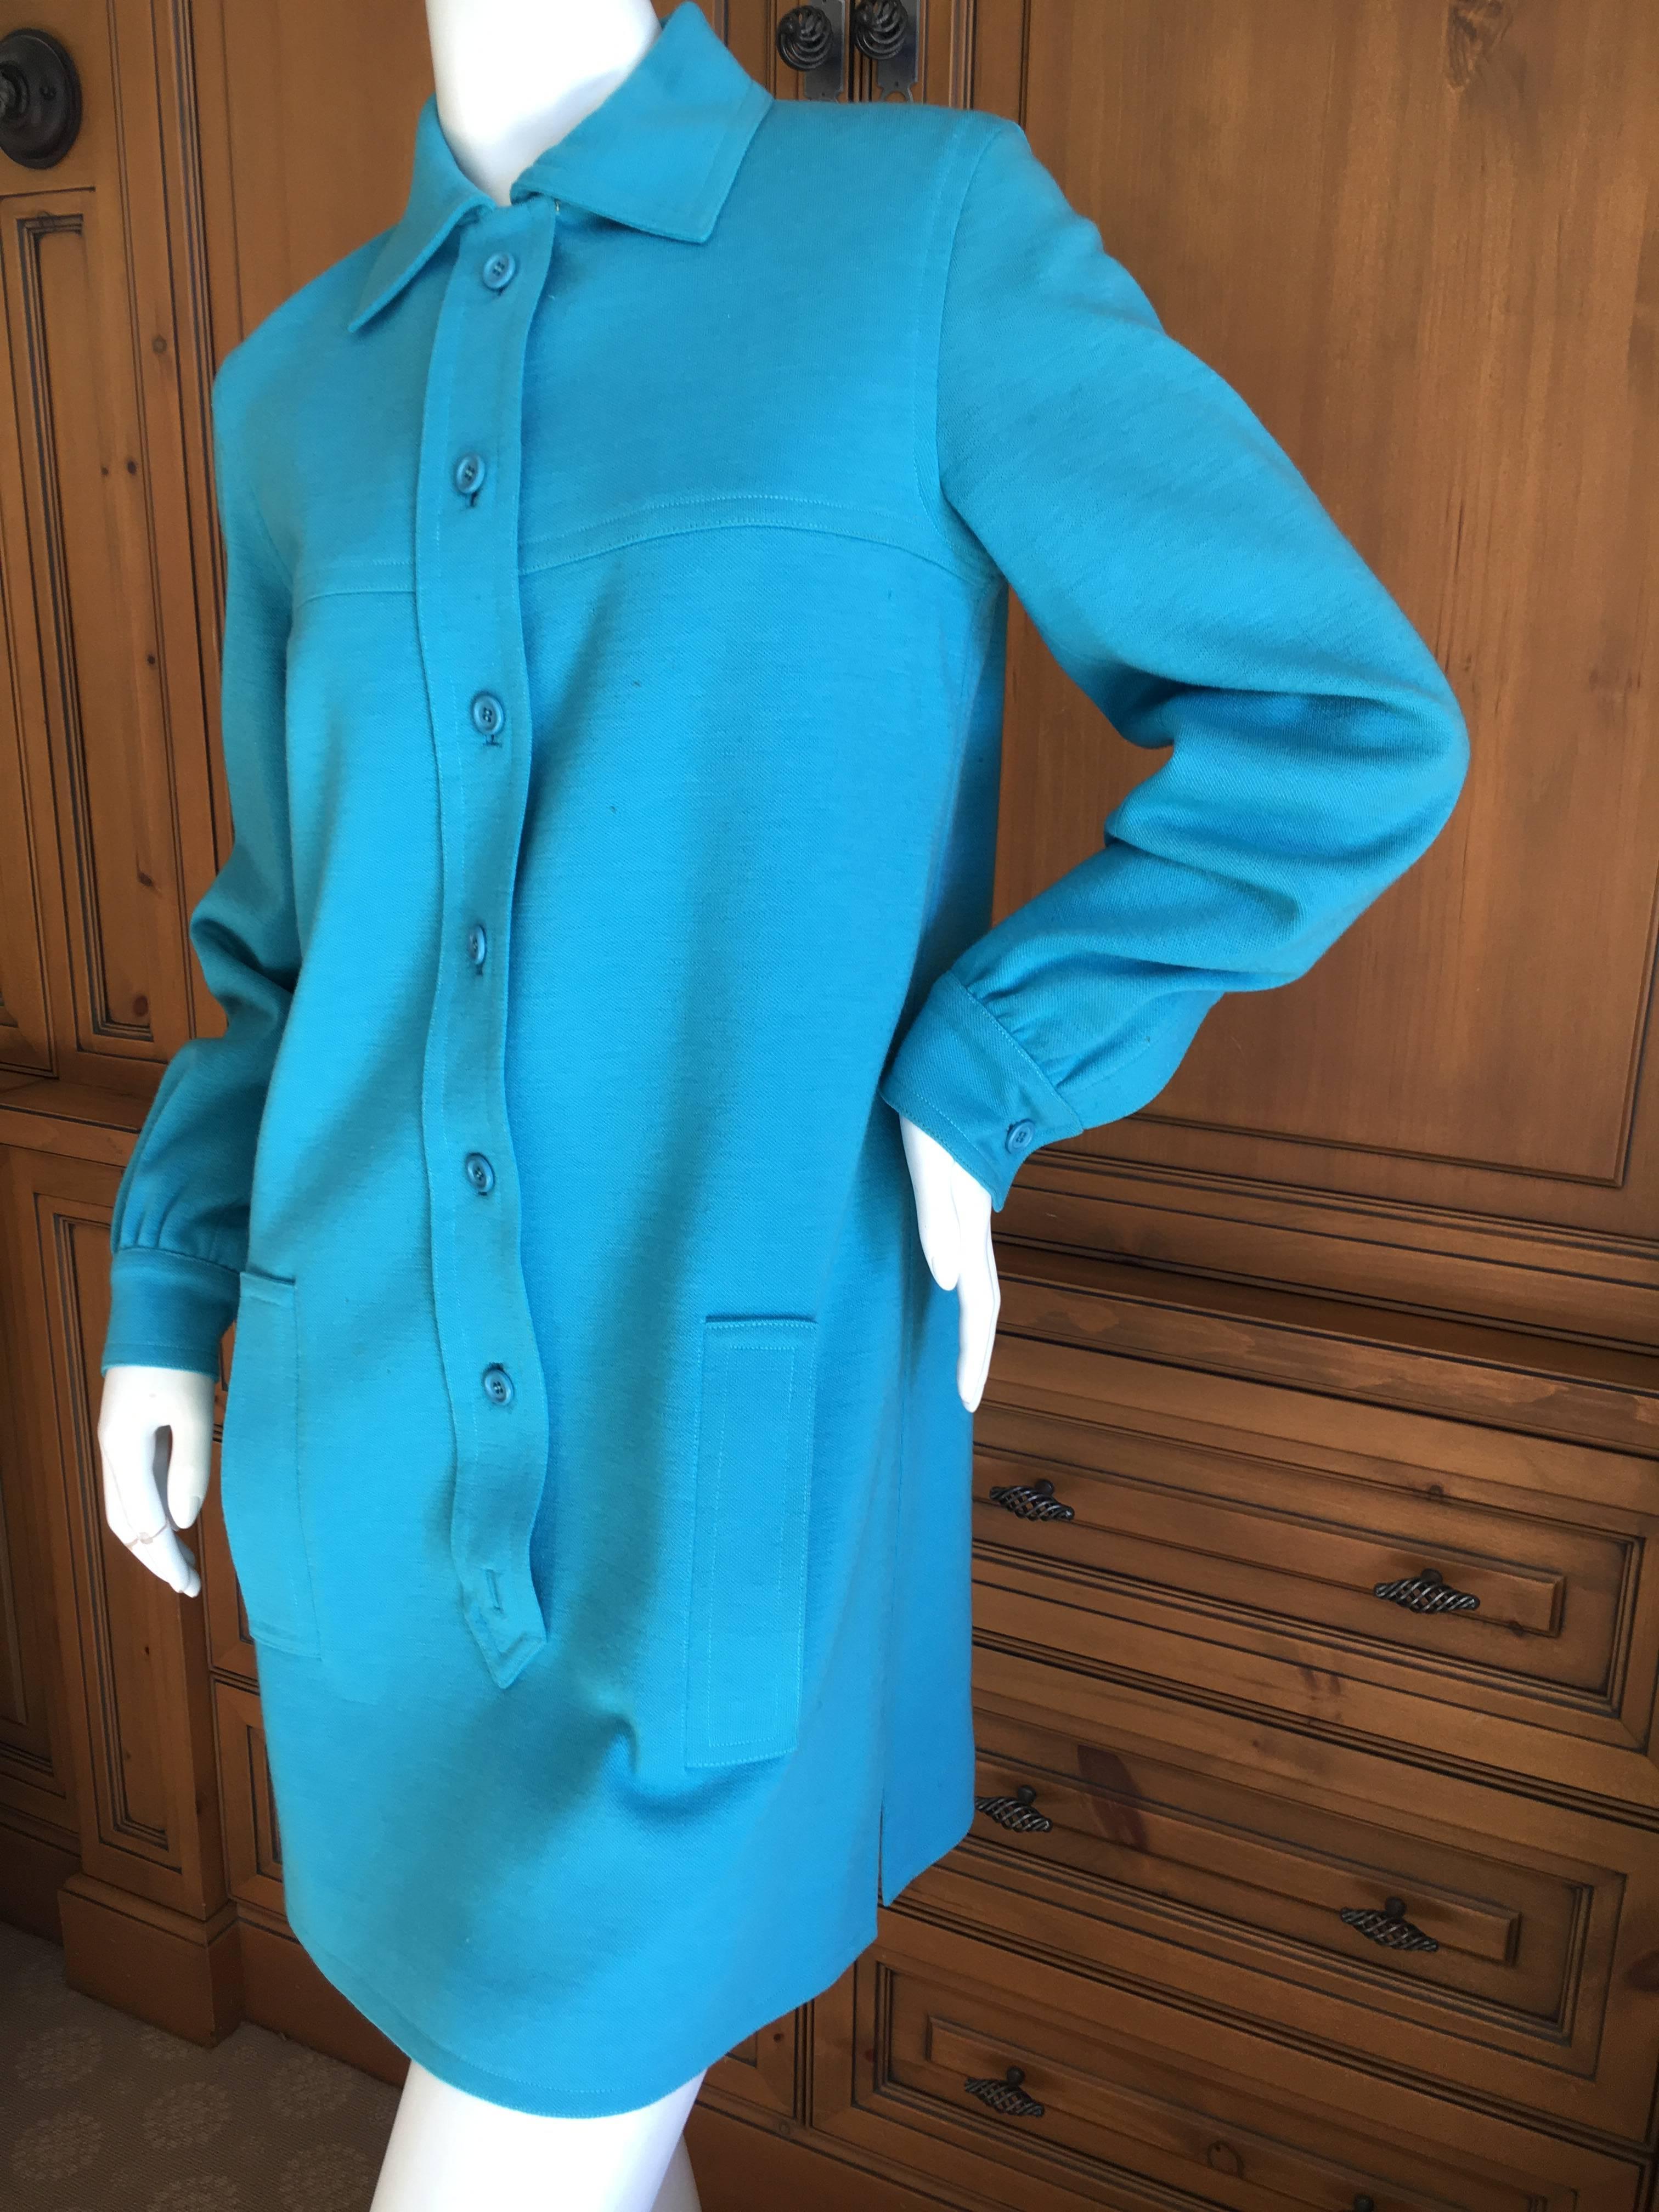 Yves Saint Laurent Rive Gauche 1970's Turquoise Chemise Dress.
Size 42
Bust 38